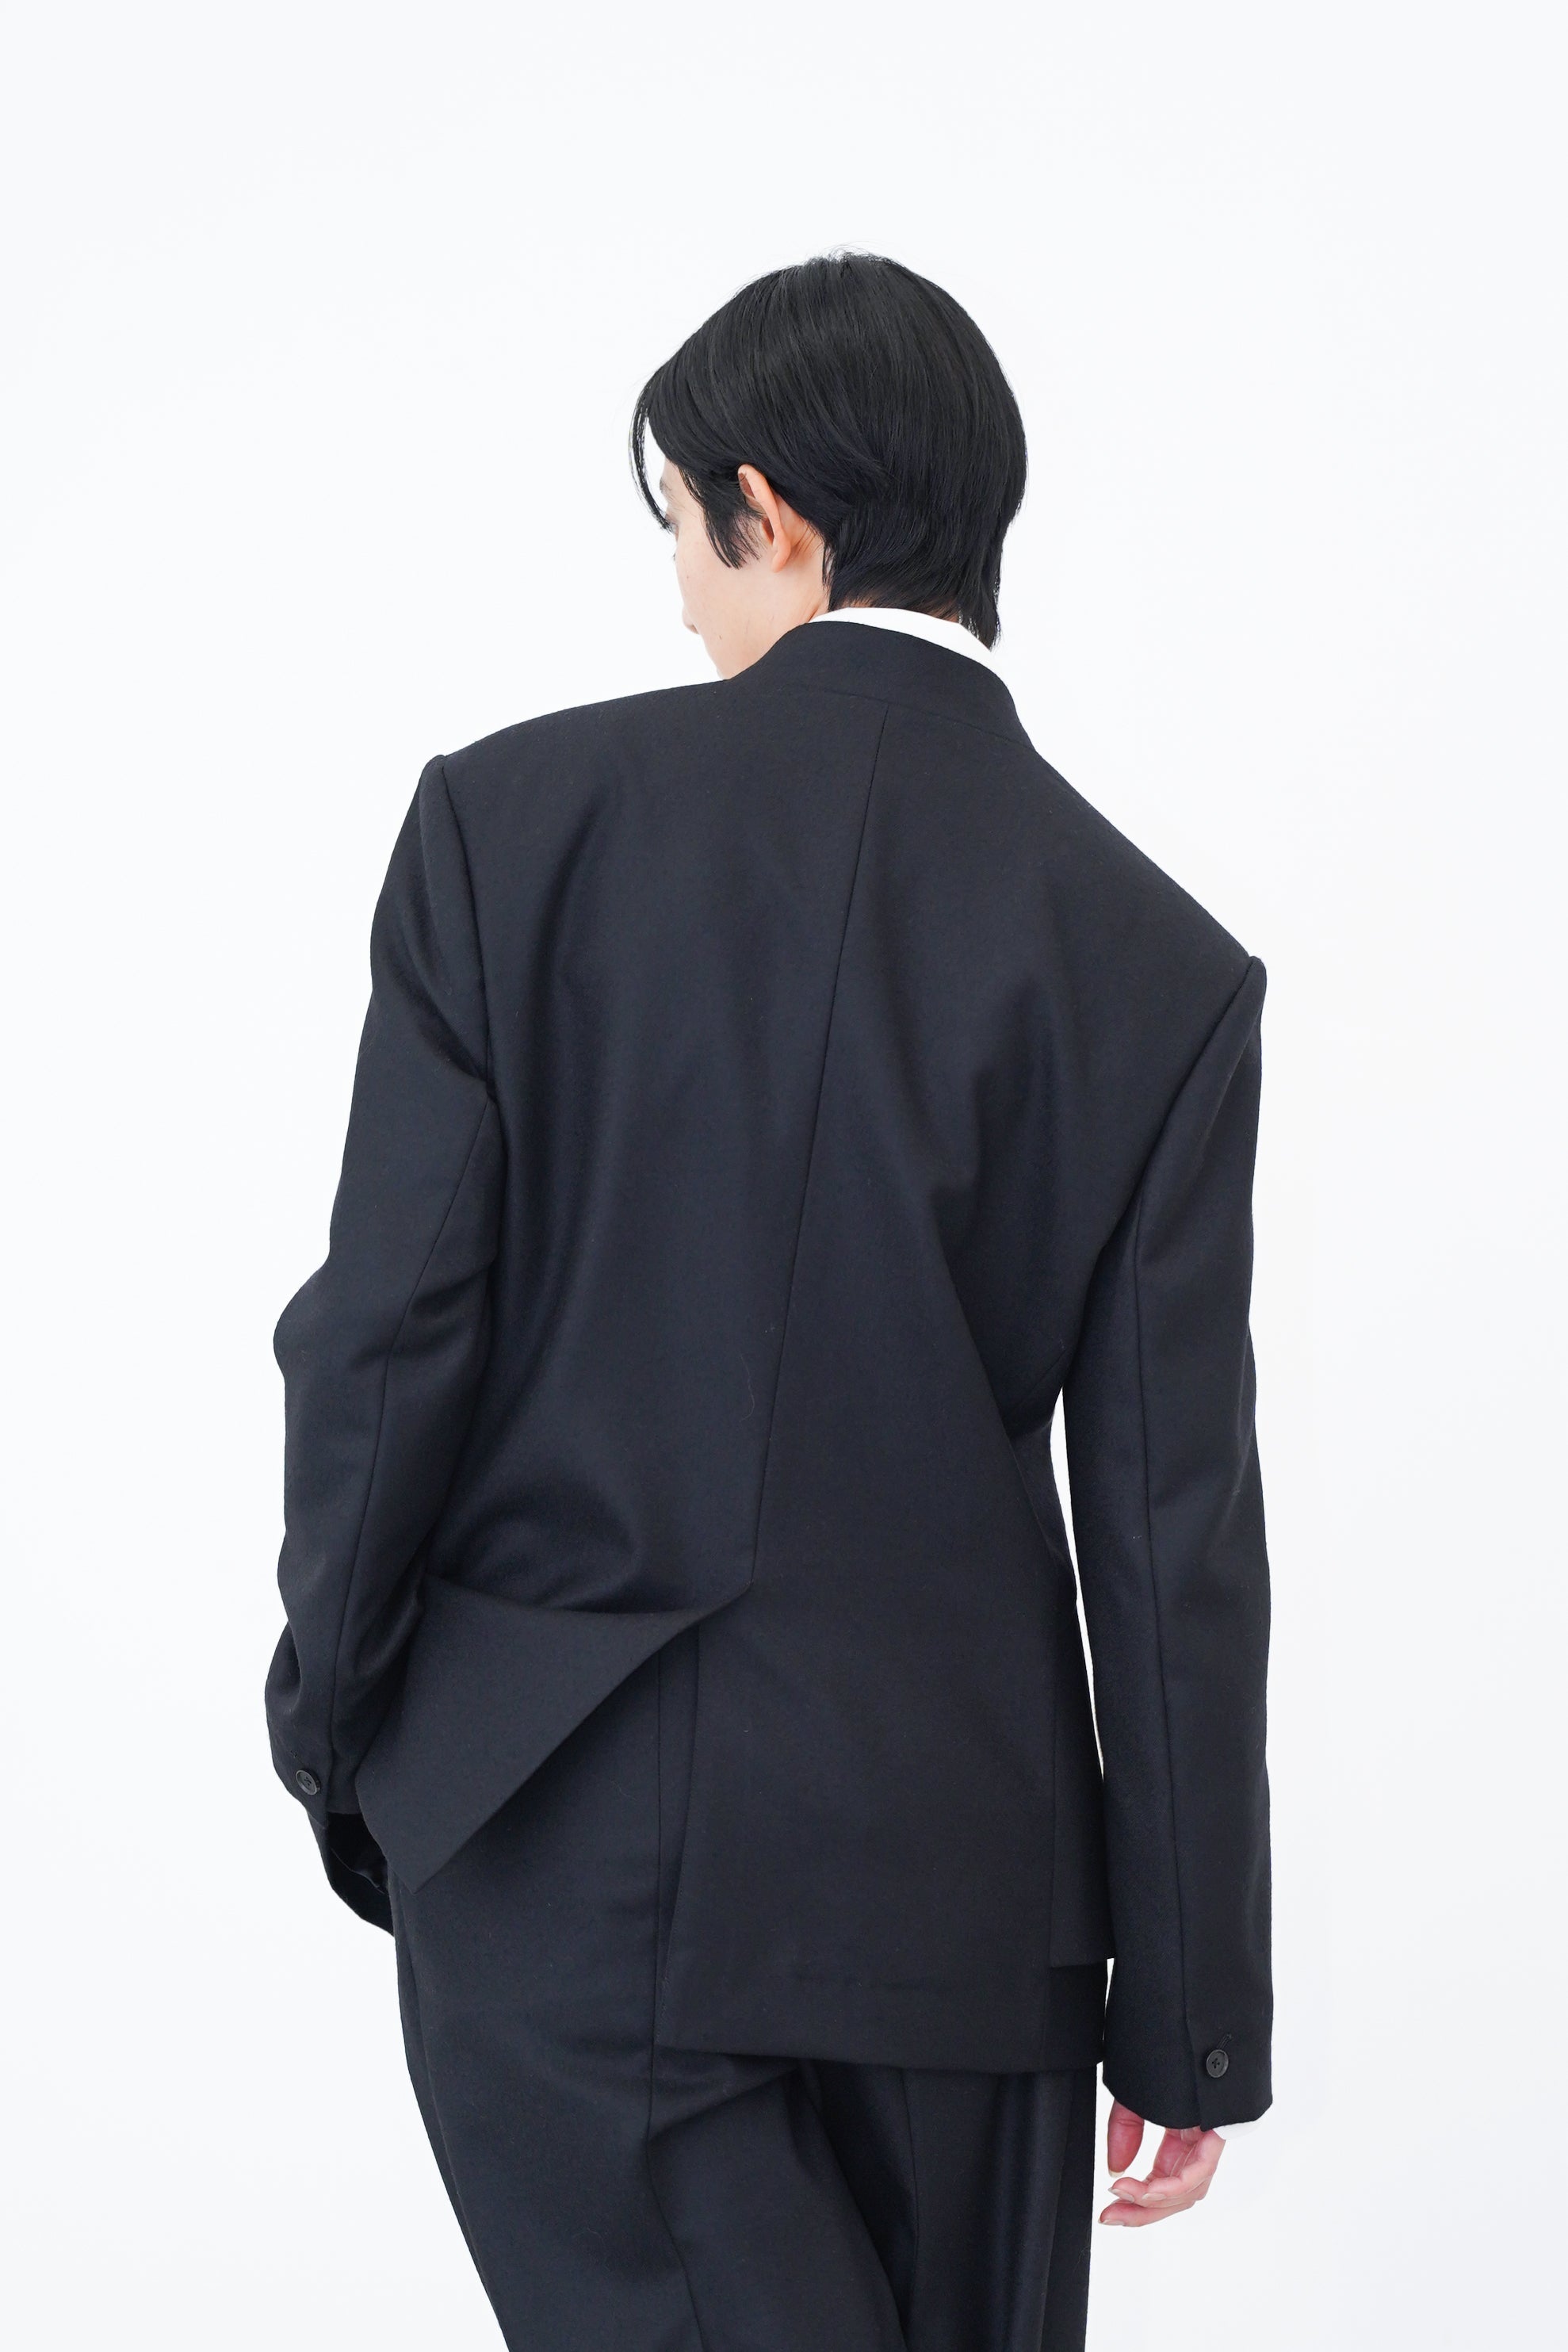 Alias Tailored Jacket / black